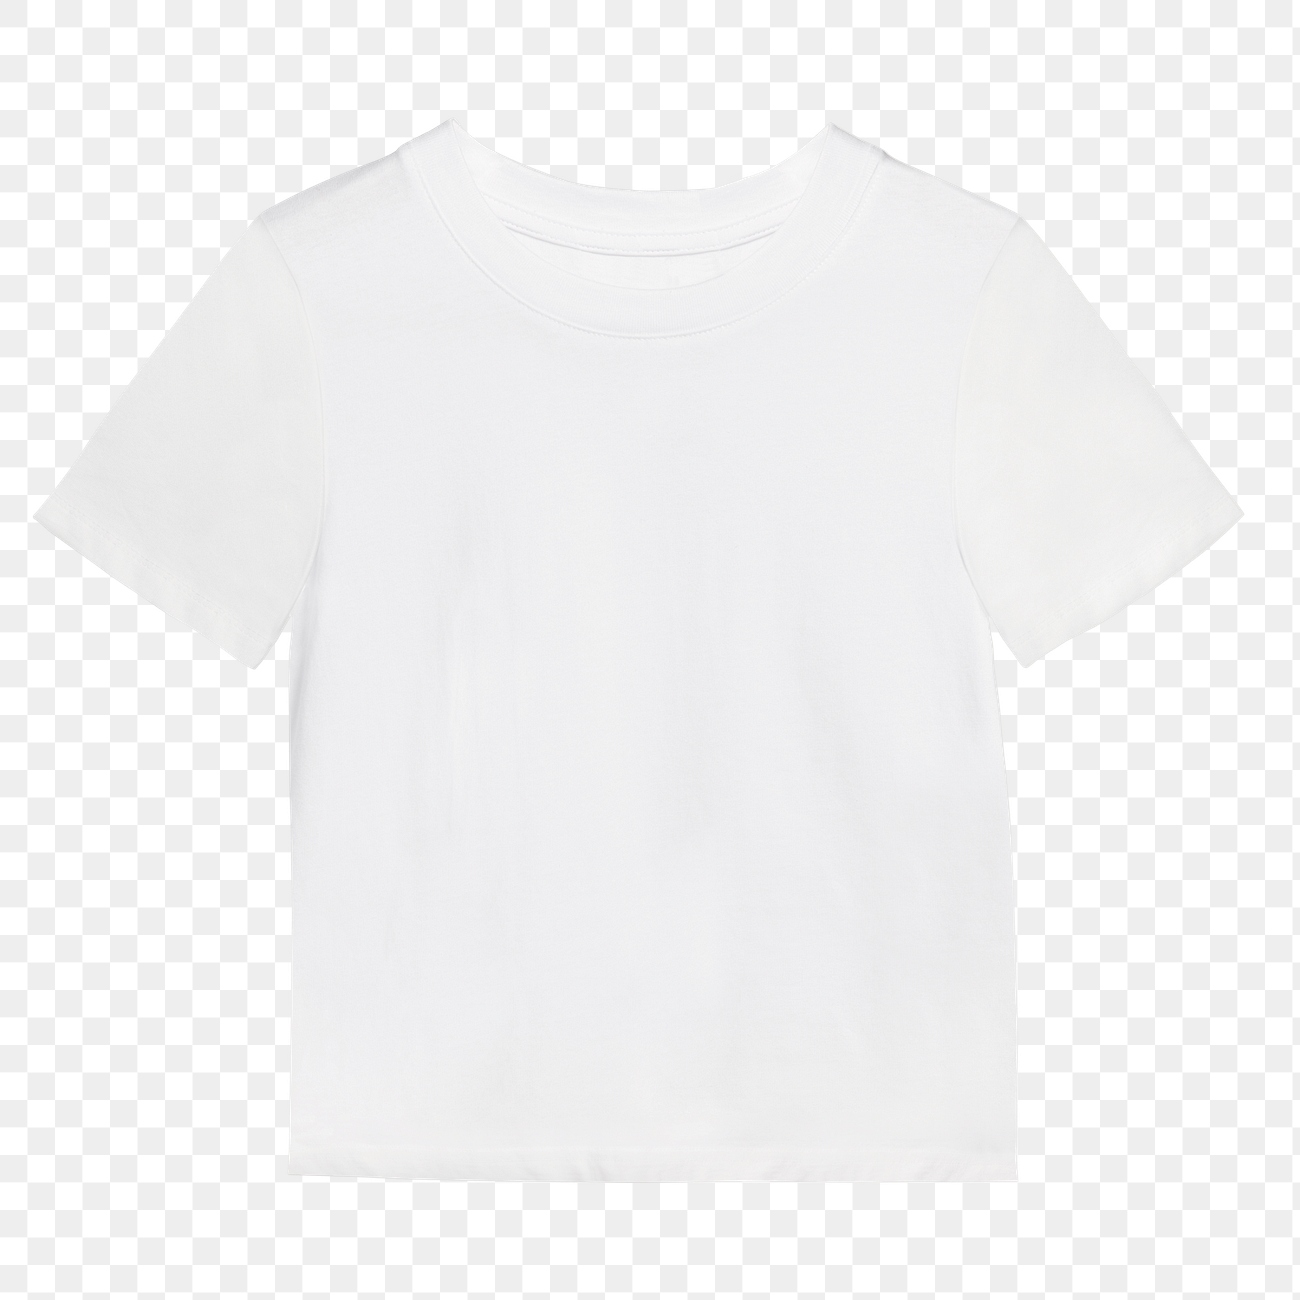 Men's white tee png t-shirt | Premium PNG Sticker - rawpixel